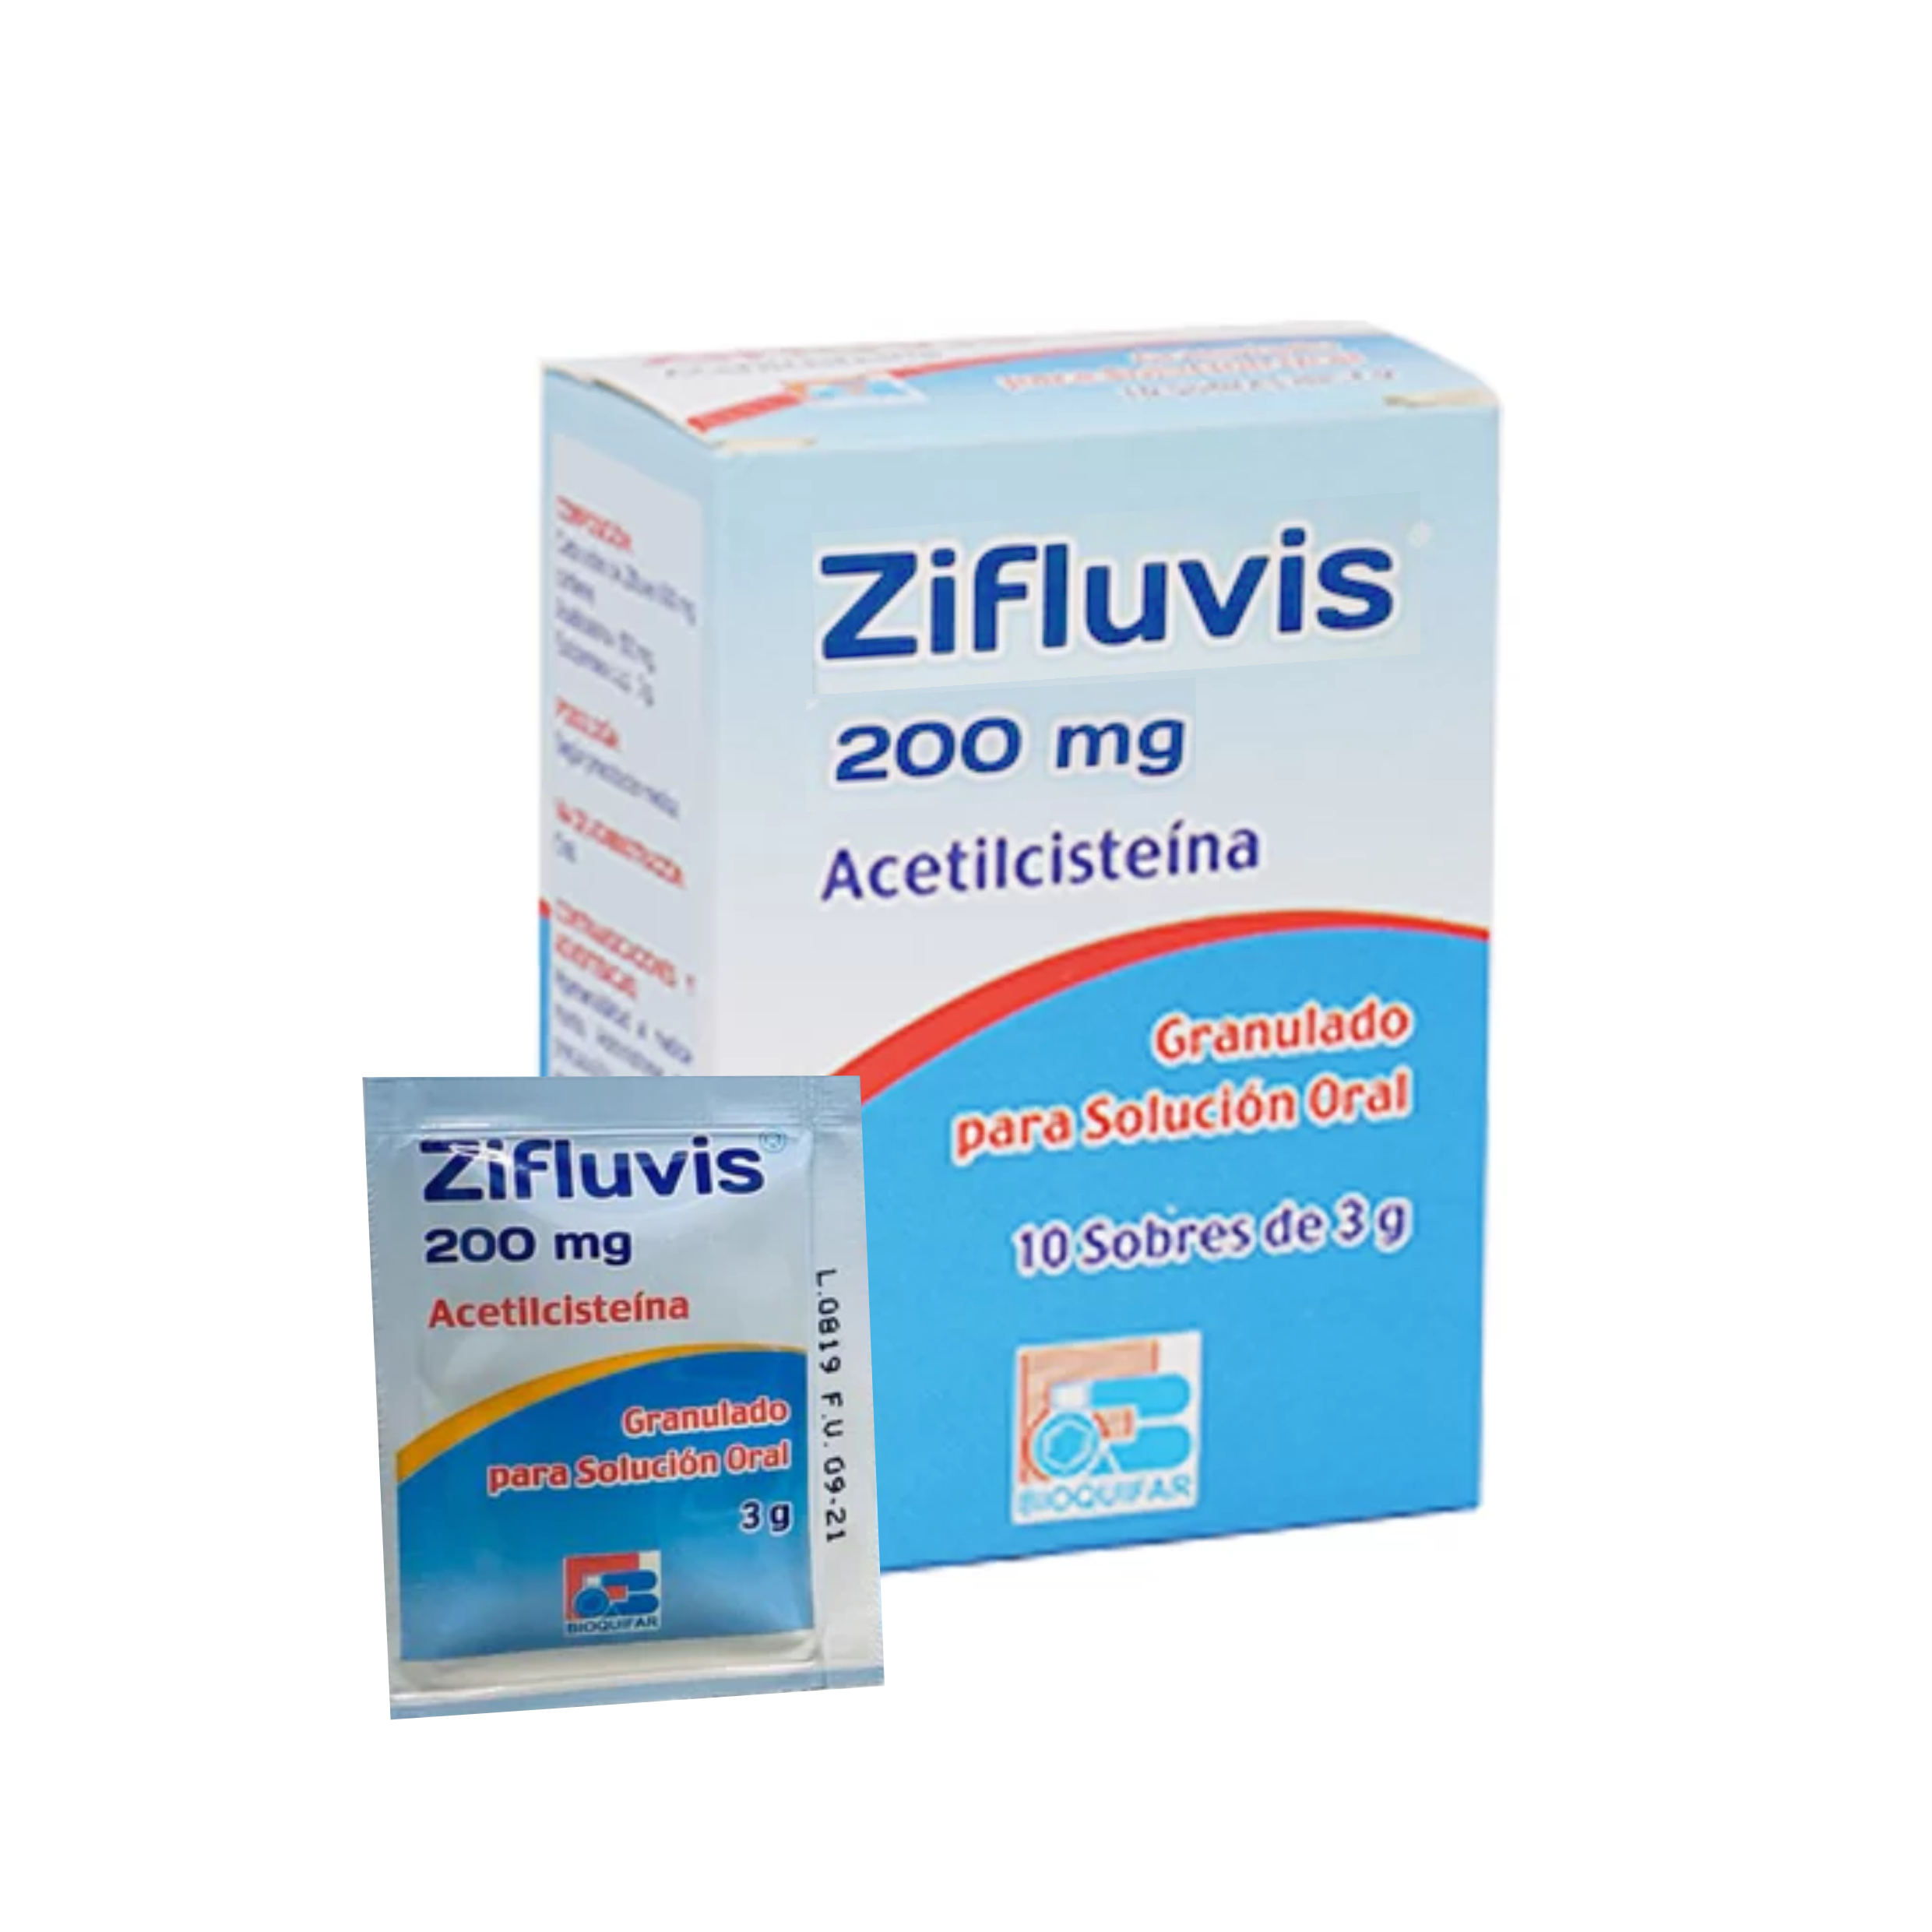 Zifluvis 200 mg 10 sobres sueltos